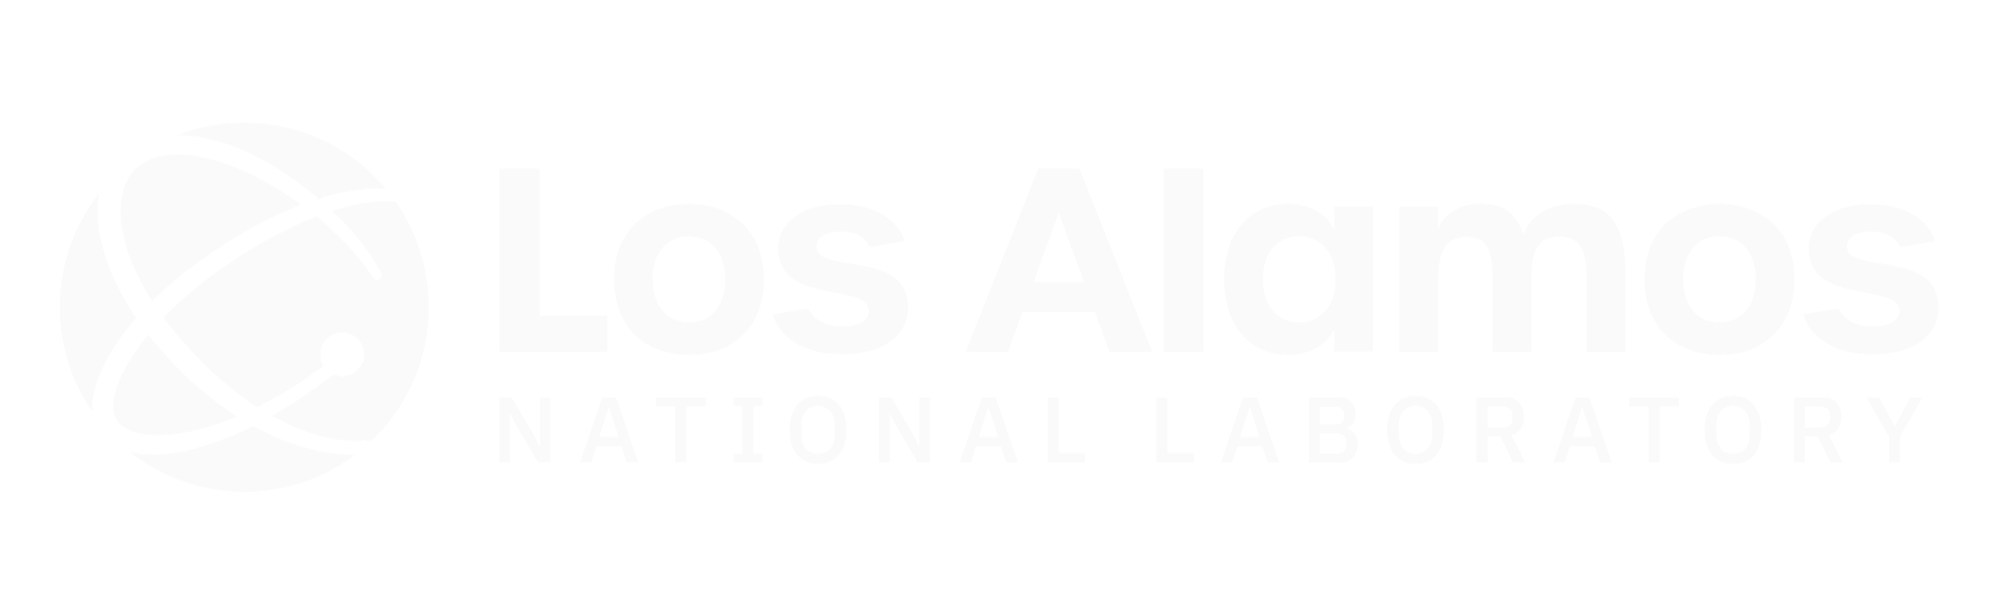 Los Alamost National Laboratory logo